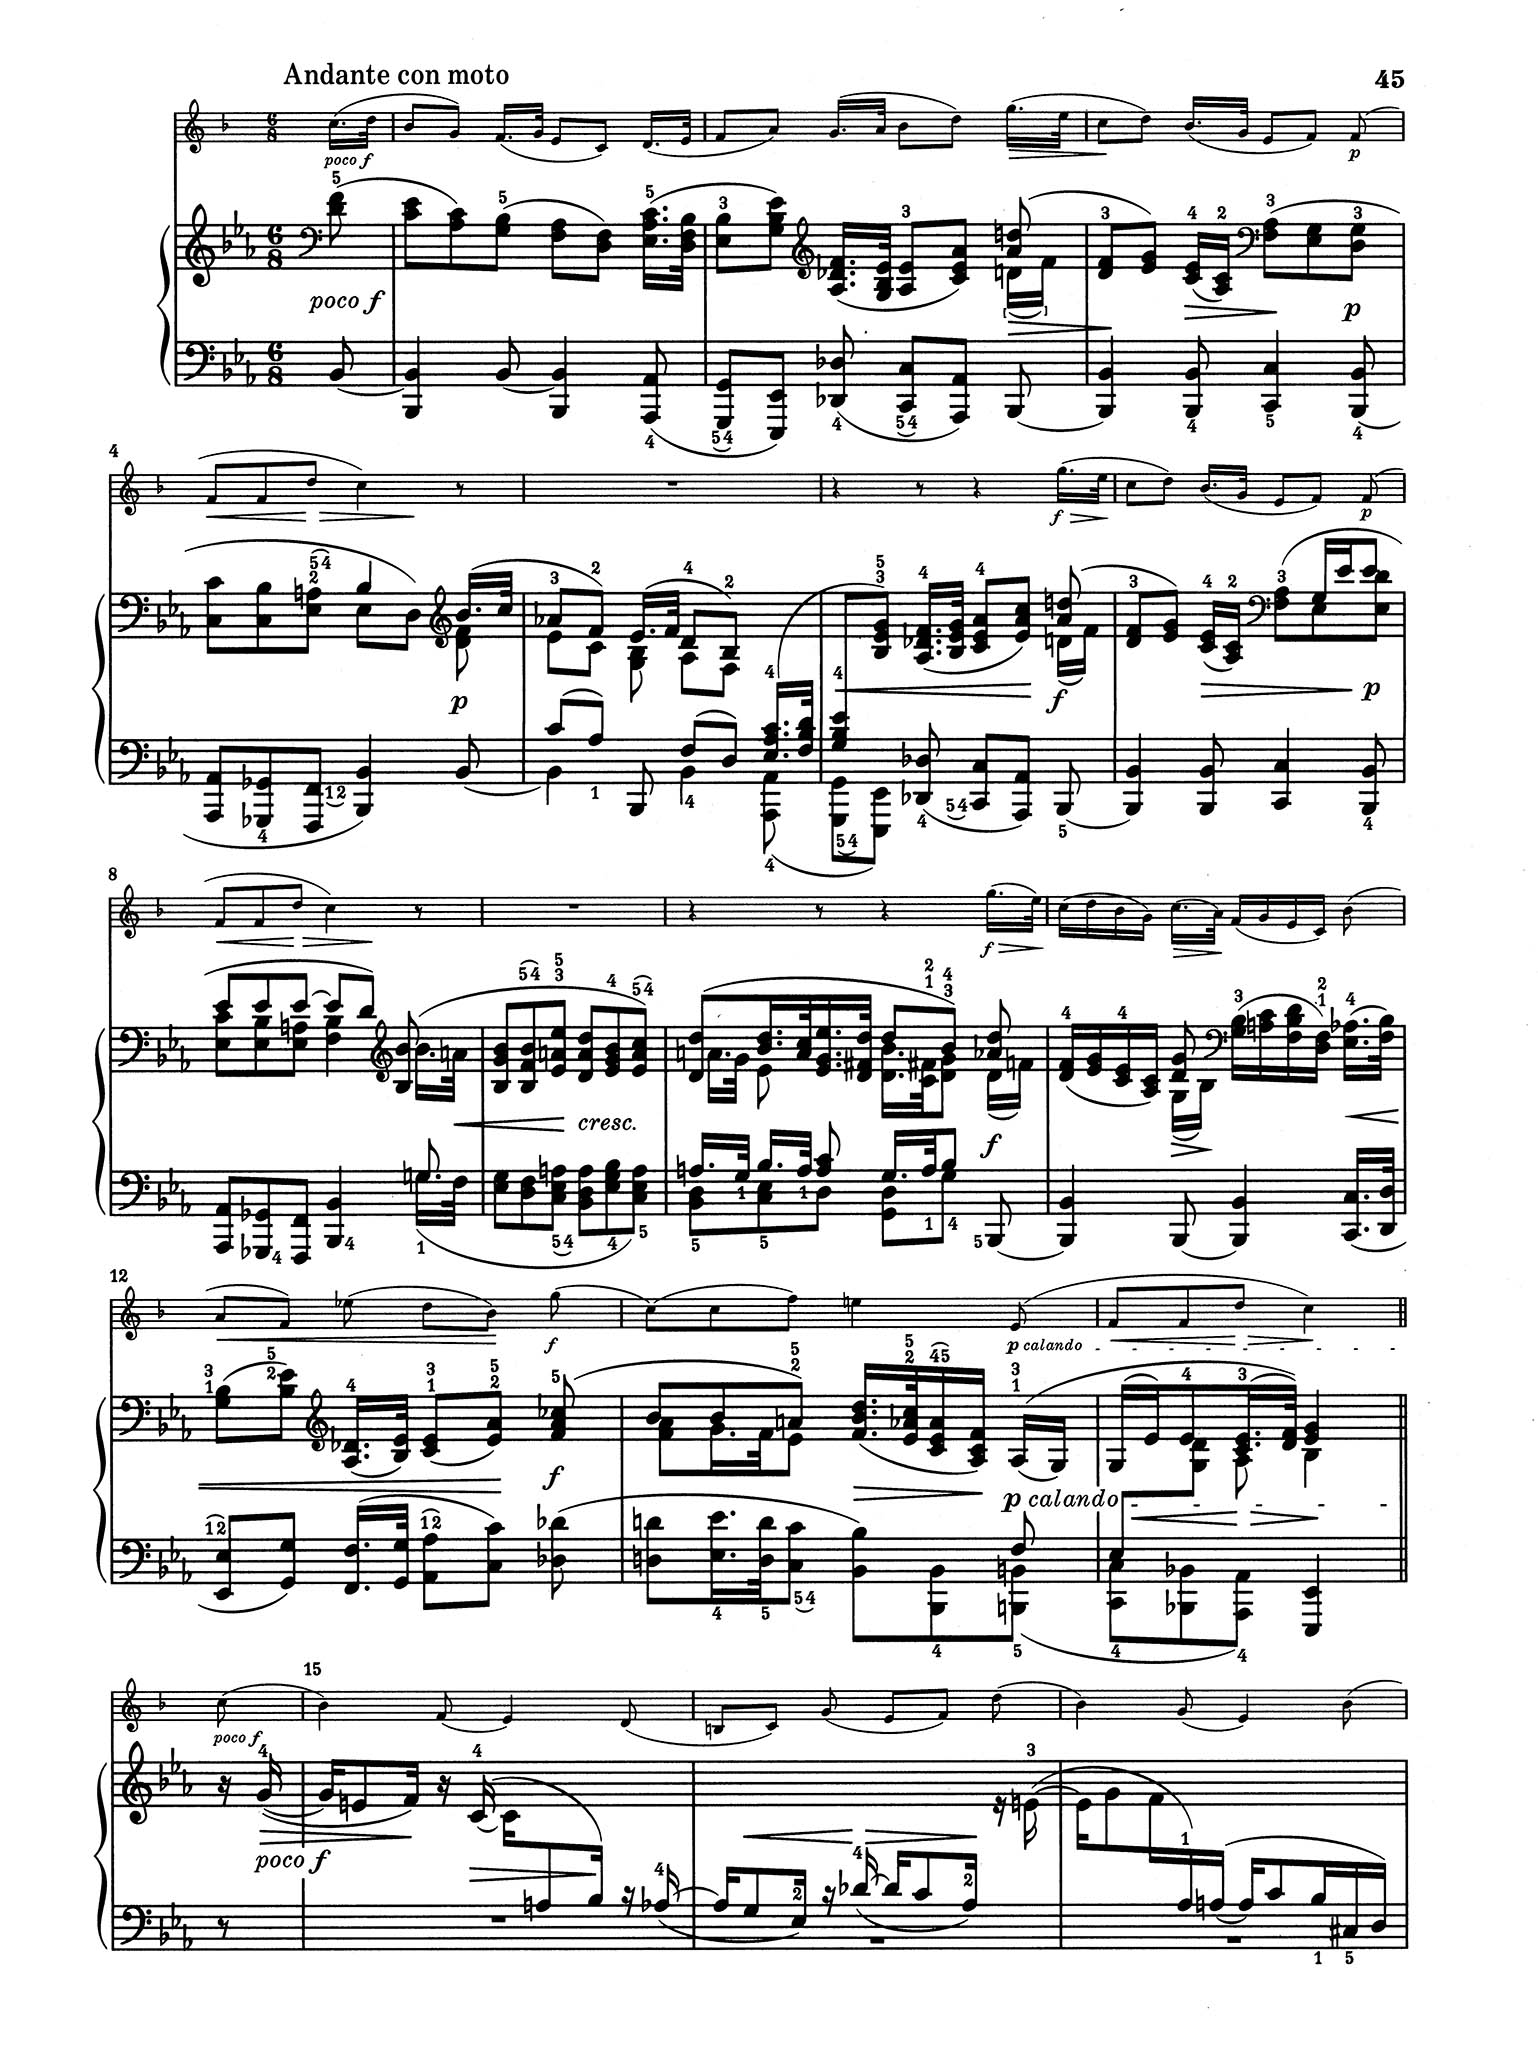 Sonata in E-flat Major, Op. 120 No. 2 - Movement 3